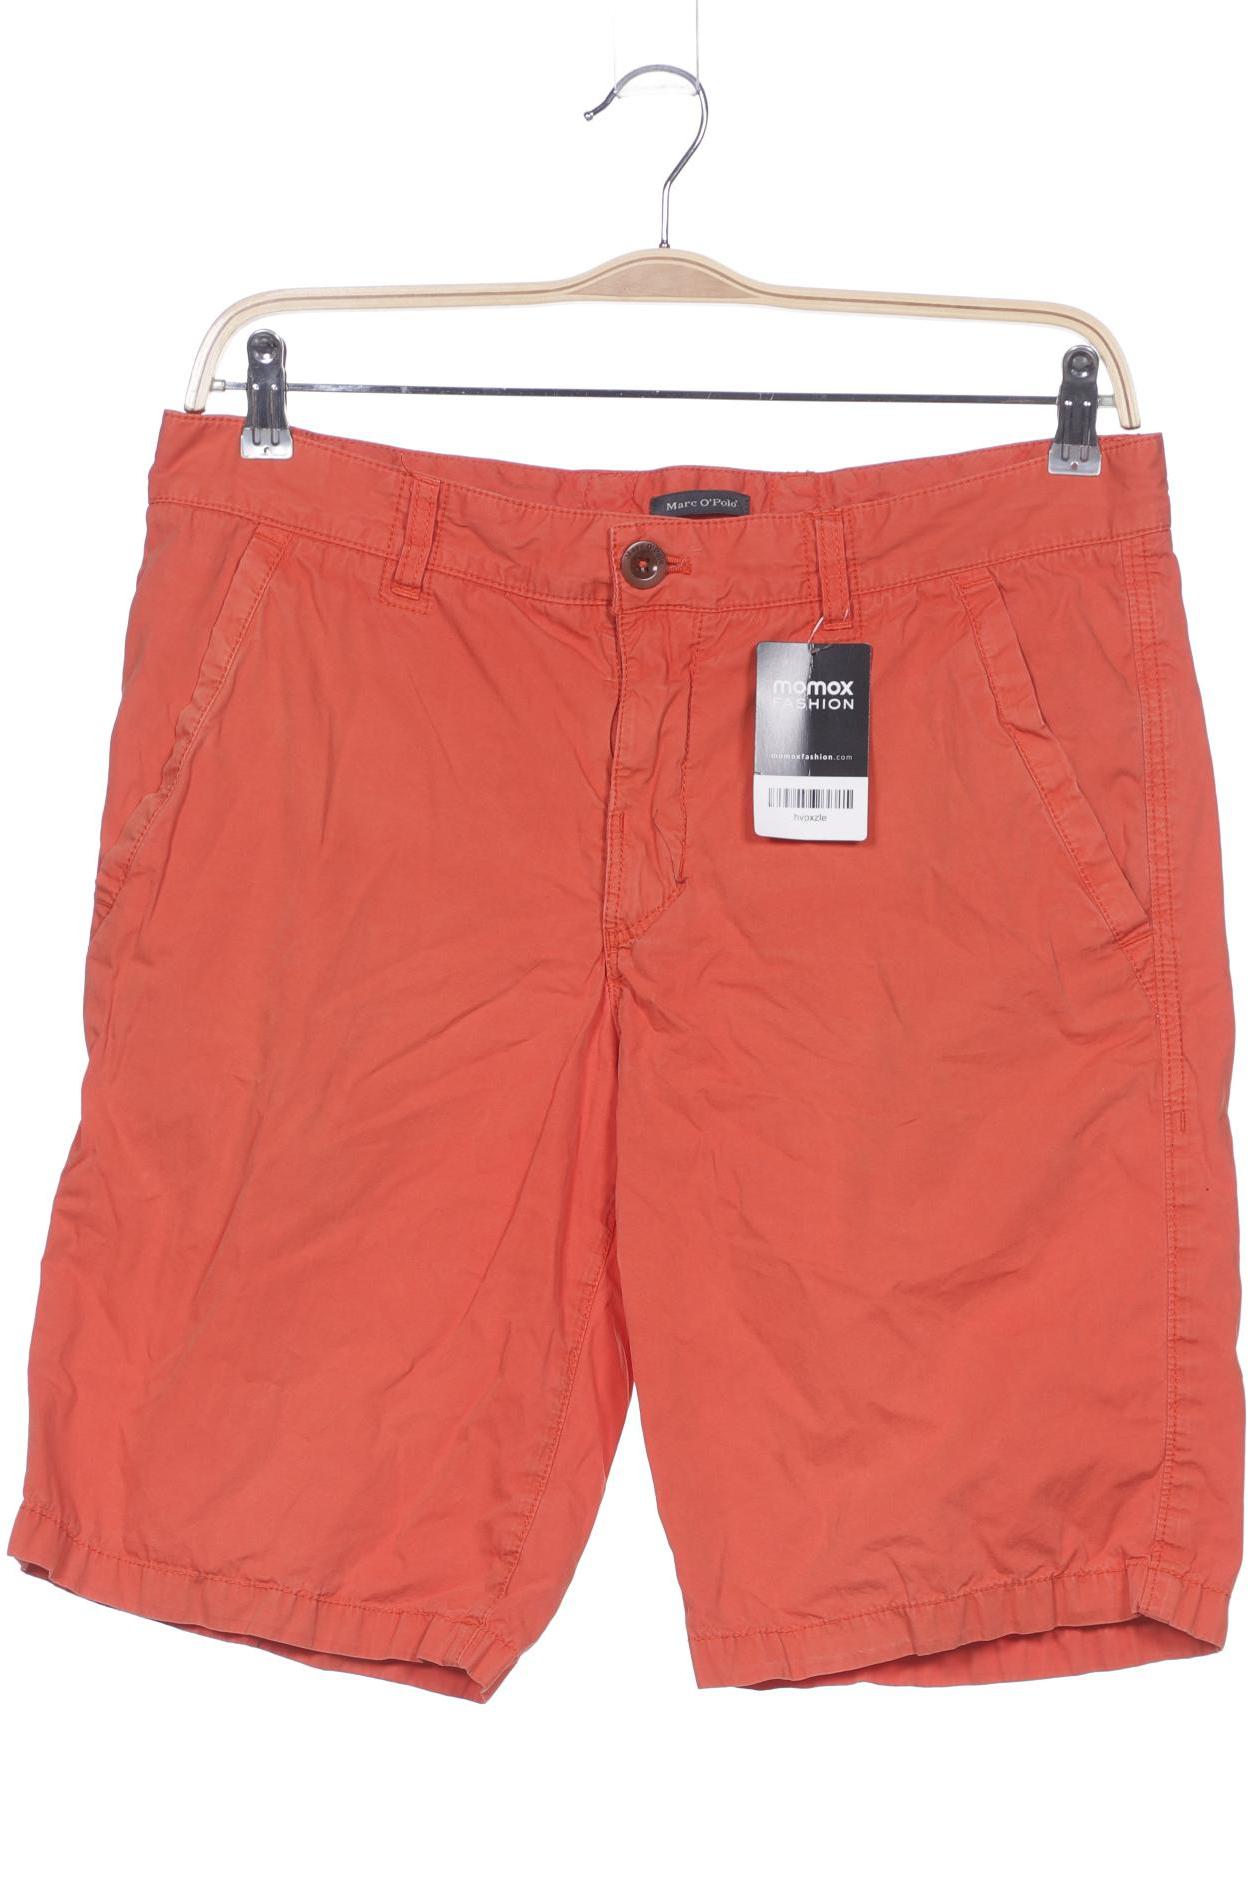 Marc O Polo Herren Shorts, orange, Gr. 50 von Marc O Polo